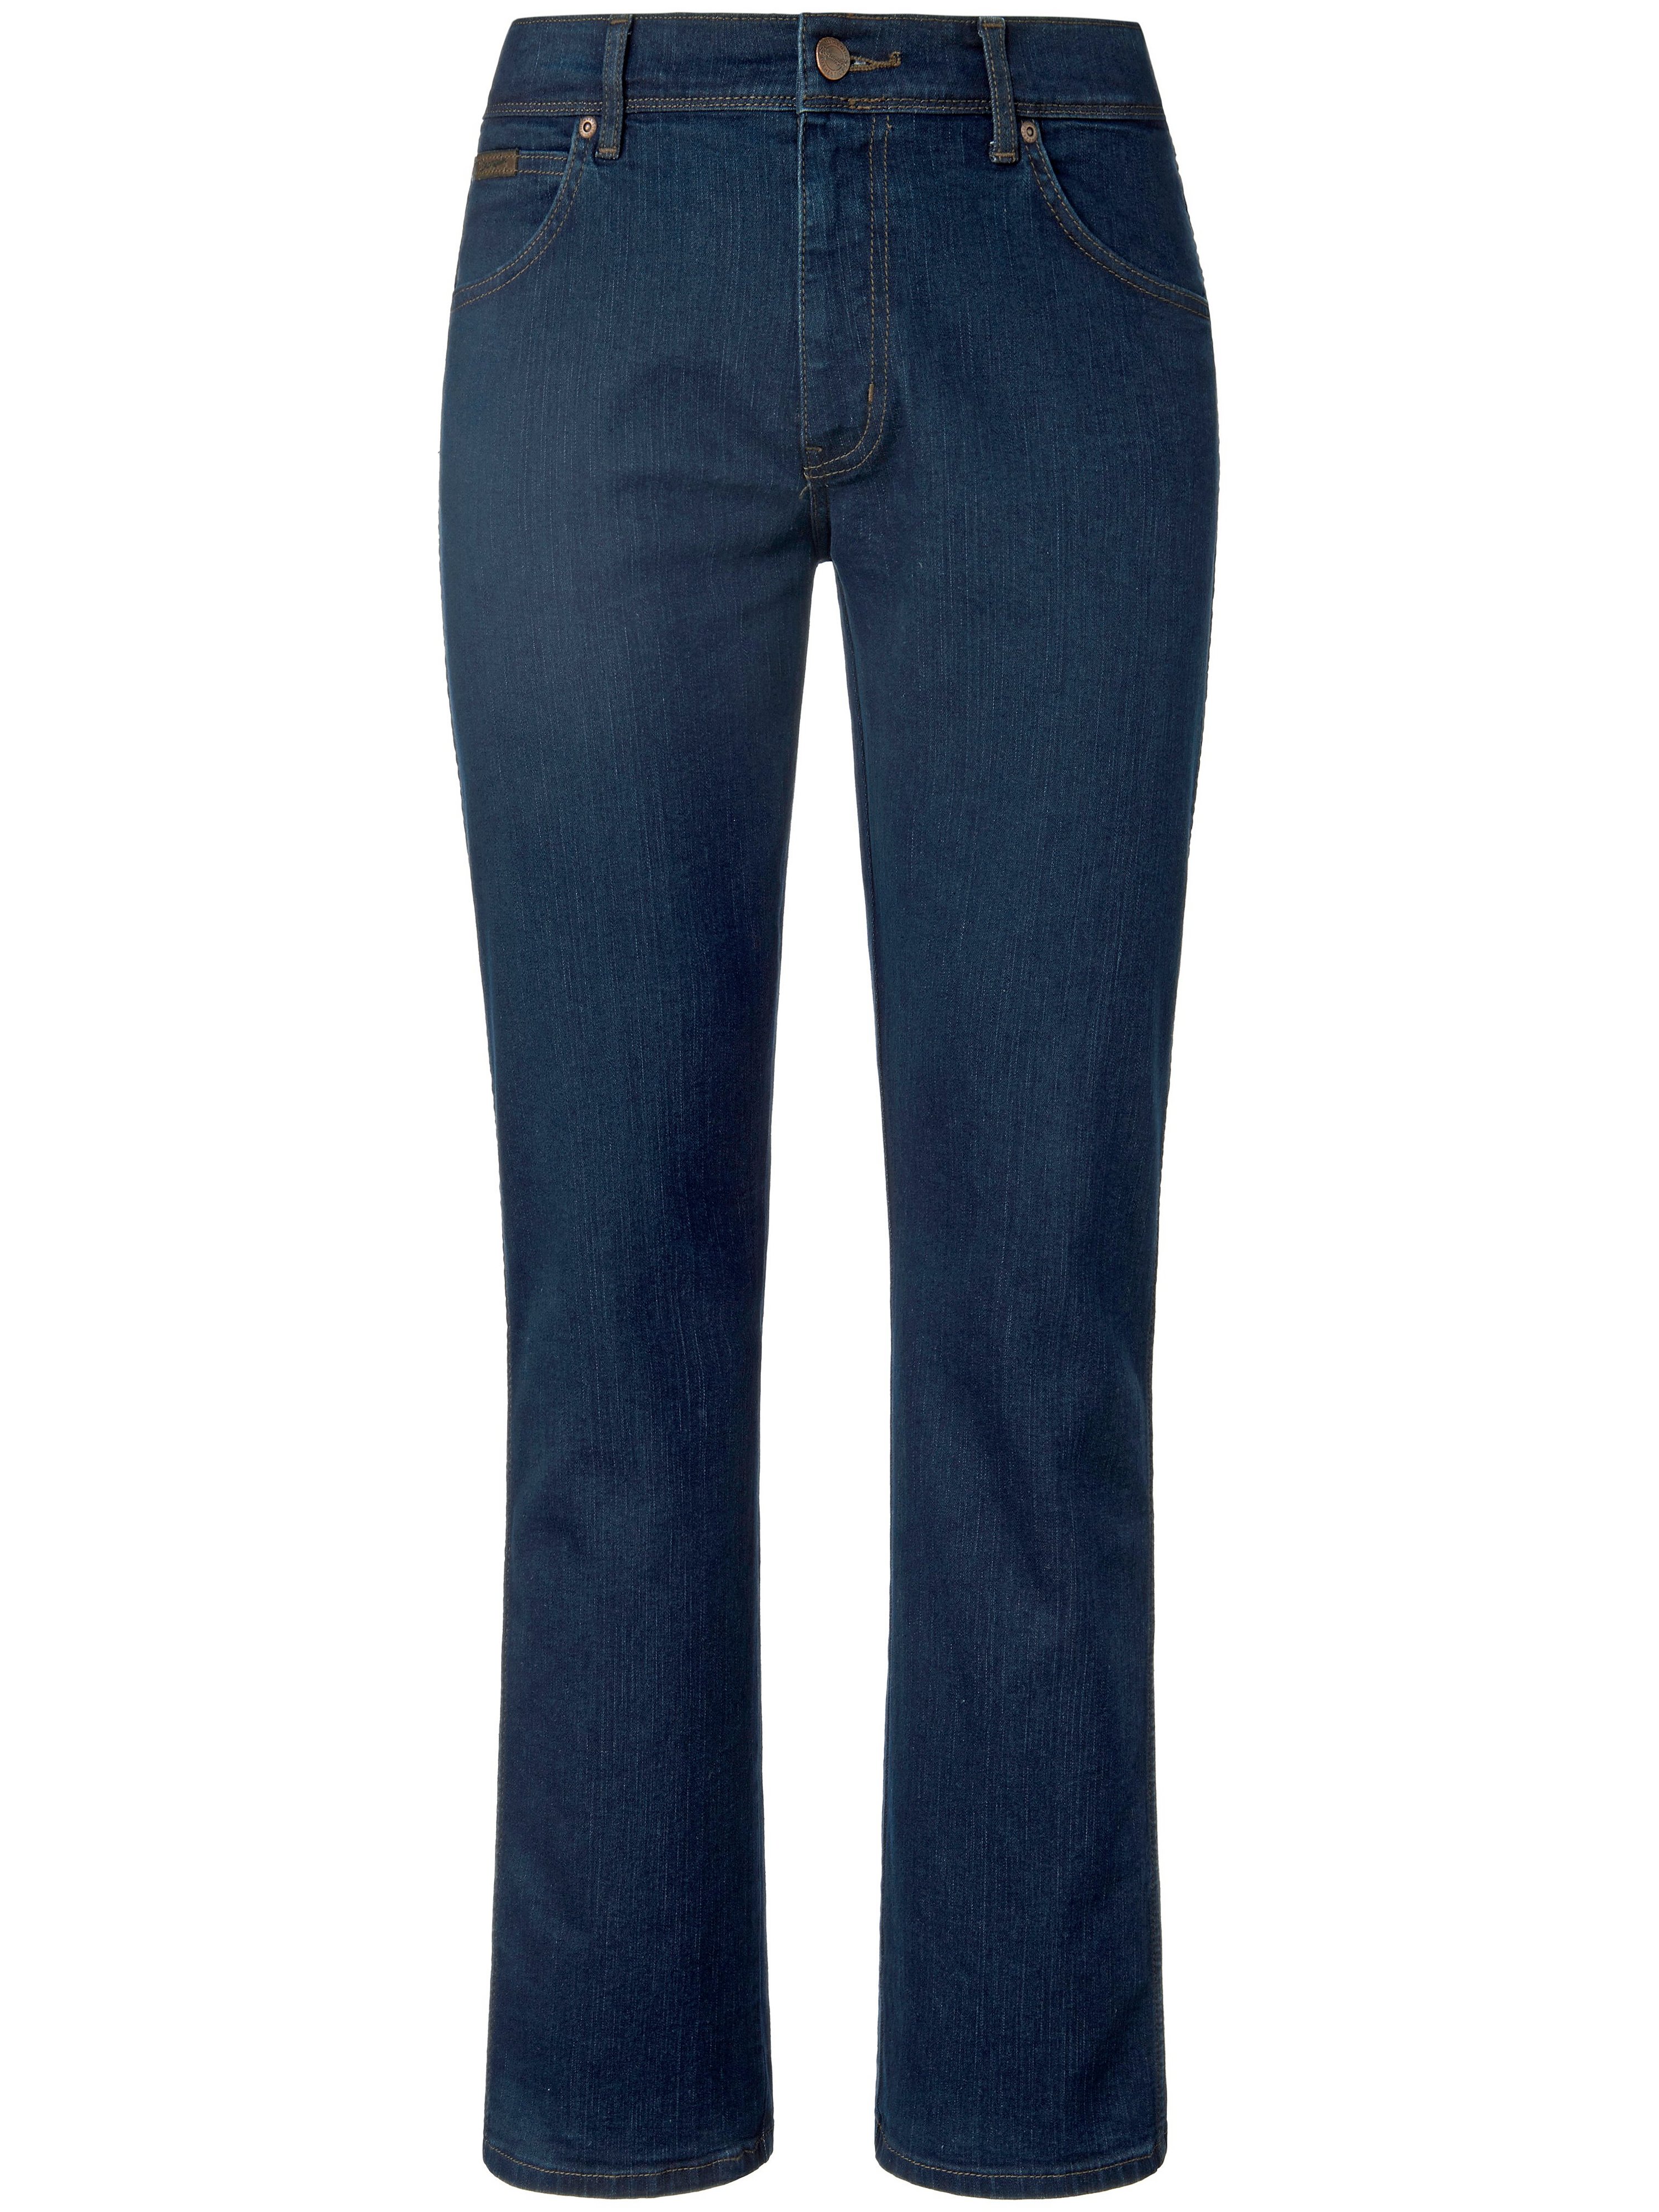 Jeans, Inch 32 Wrangler blau Größe: 38